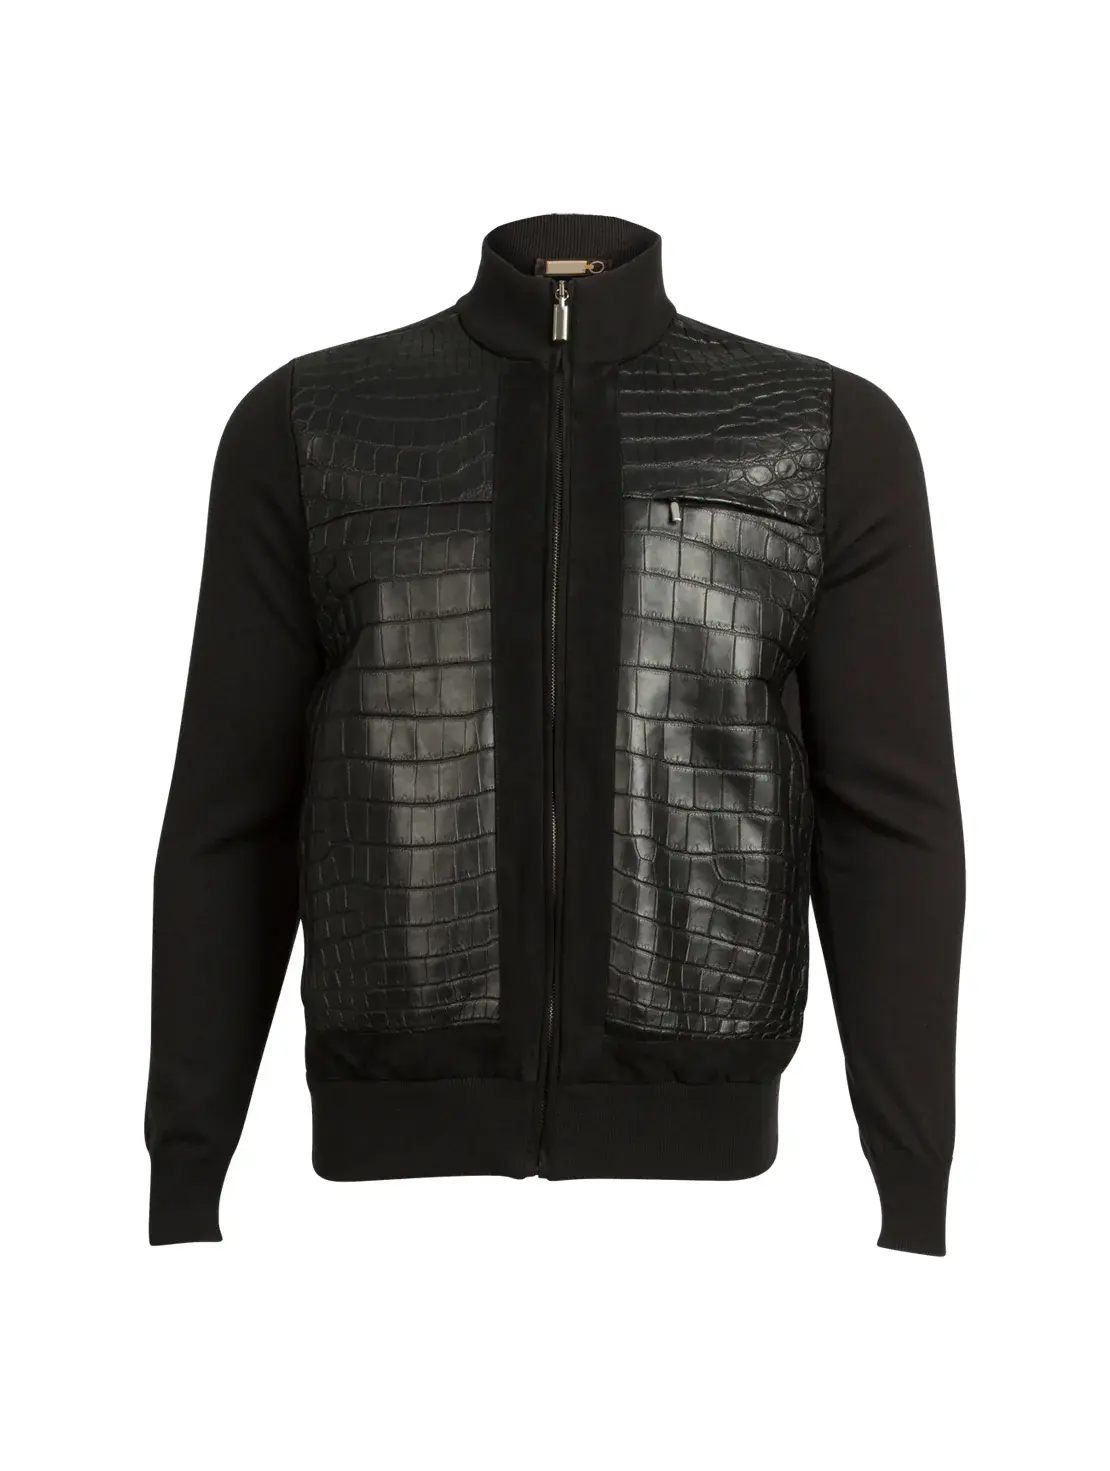 VAINAS European Brand Mens Leather jacket for men Winter Real leather jacket  Genuine sheep leather jackets Biker jackets Tomcat